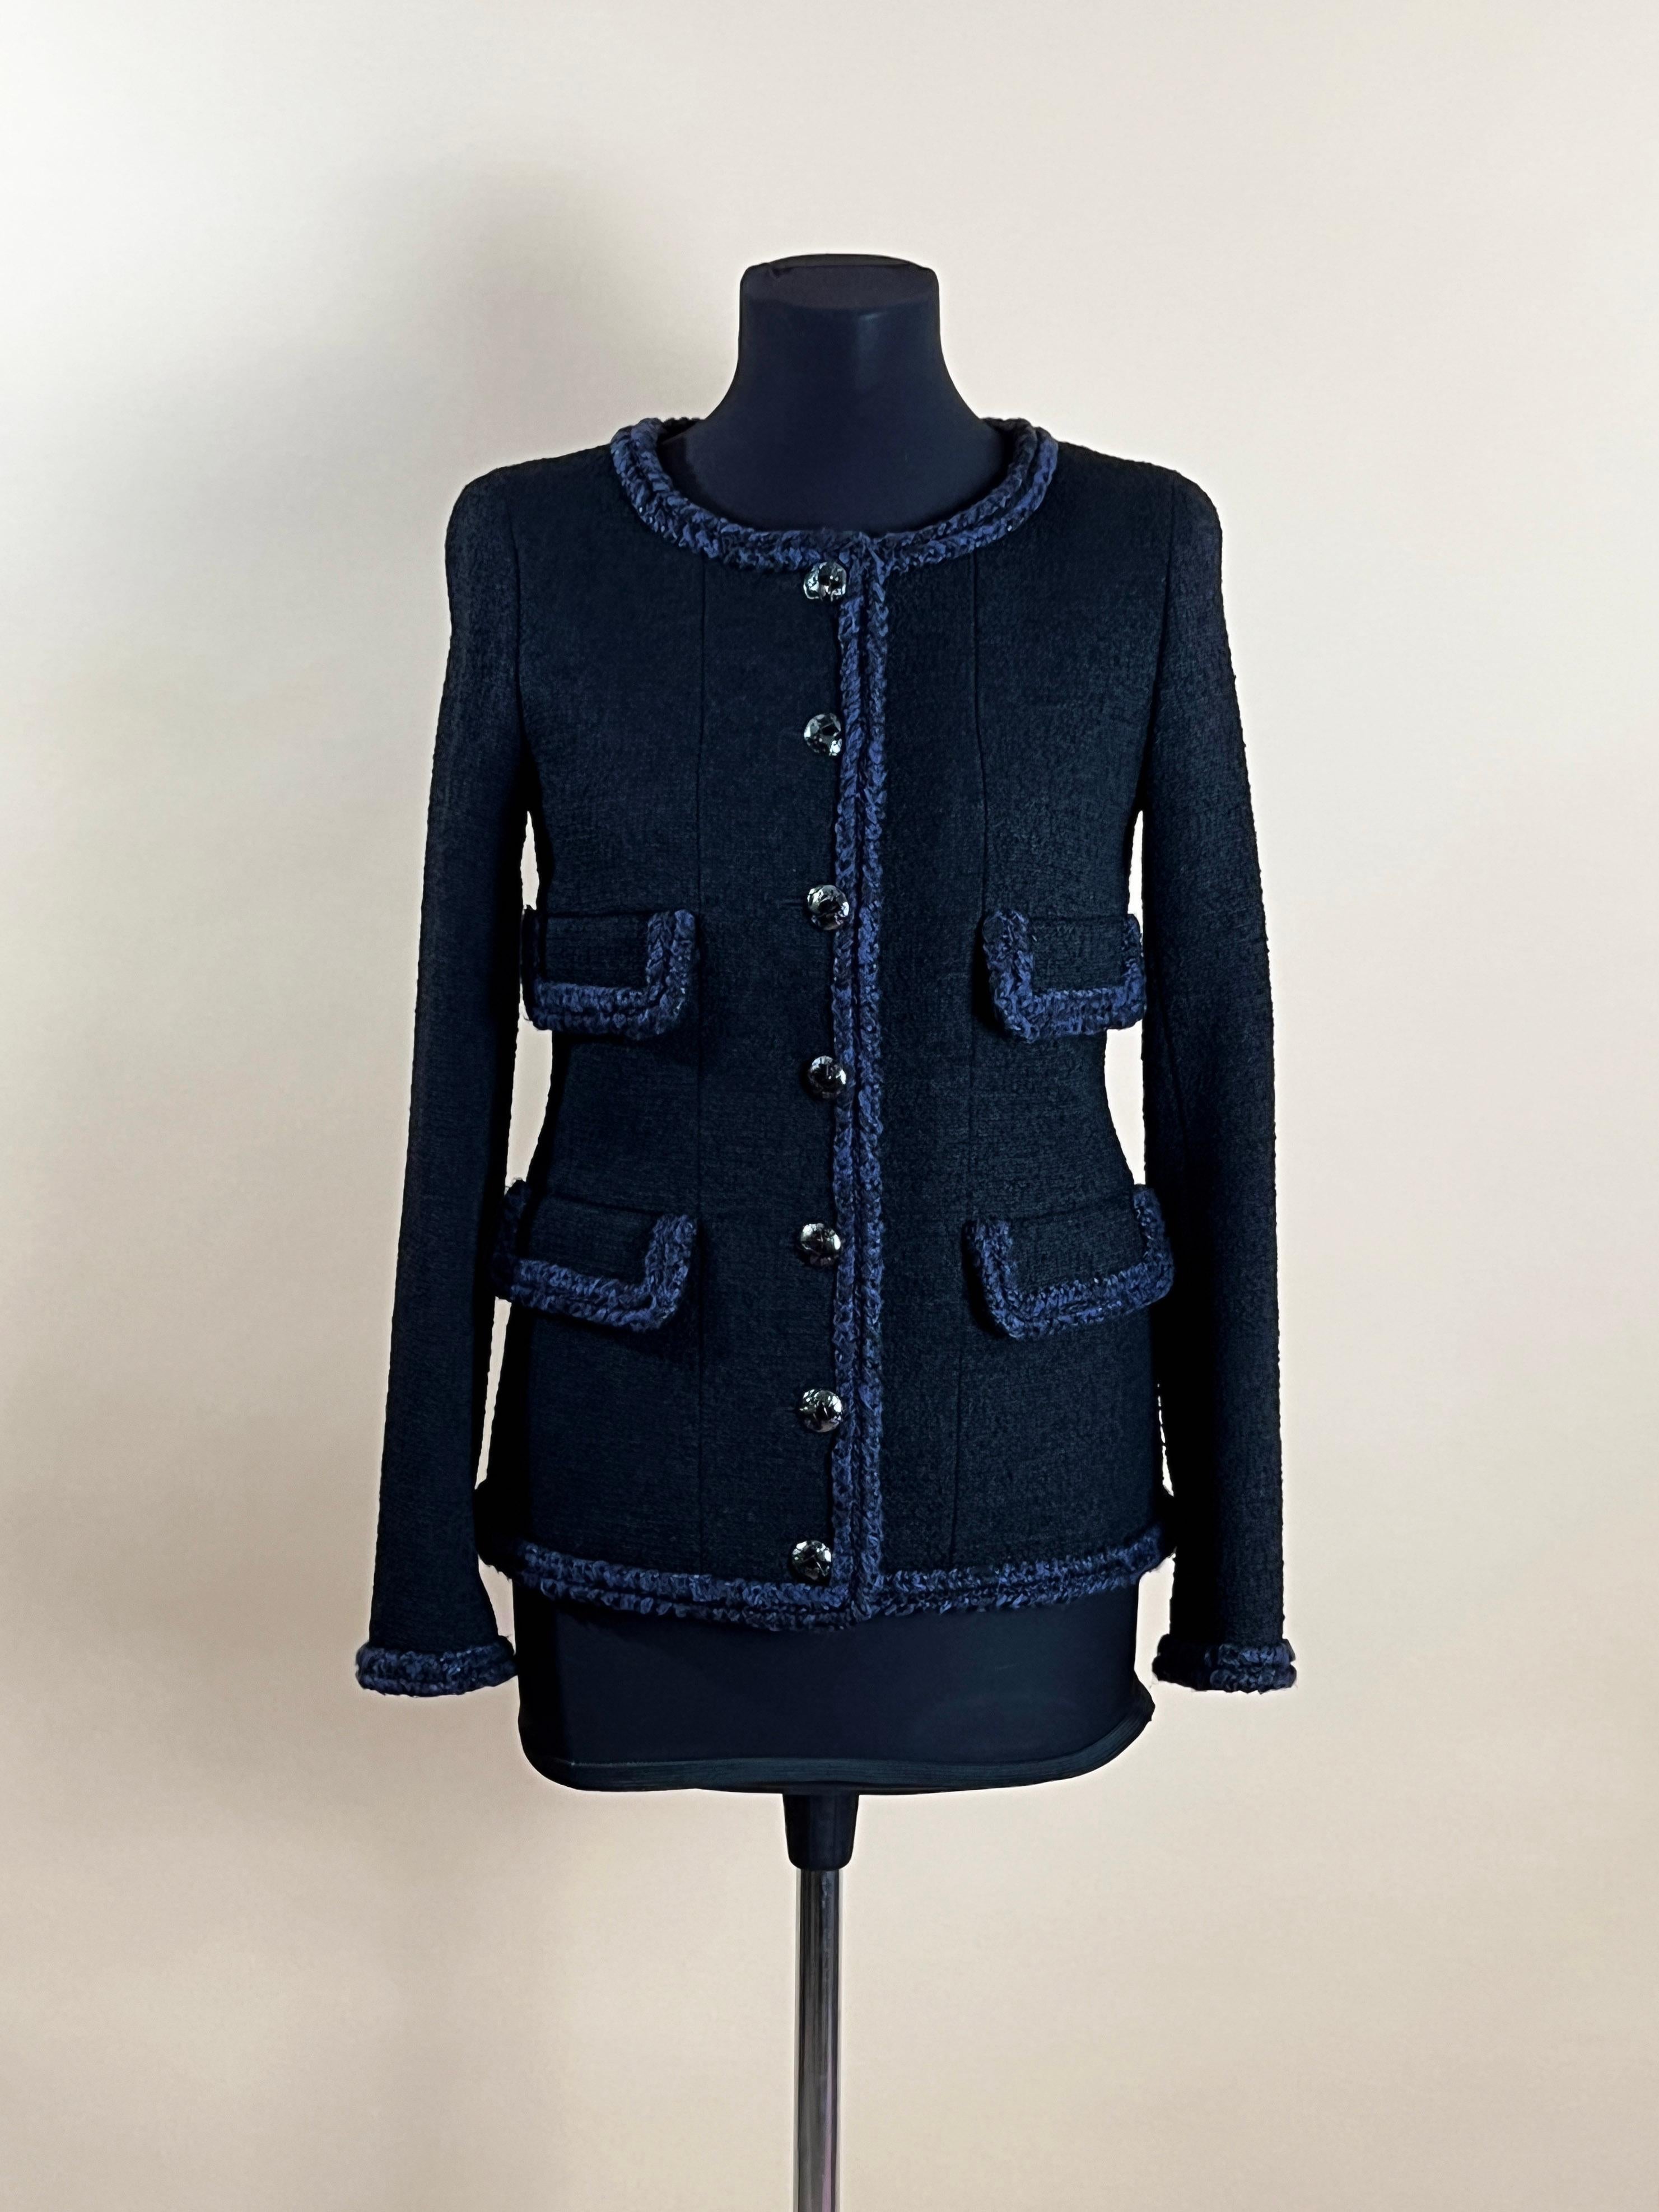 Chanel Most Iconic Globalization Black Tweed Jacket 9